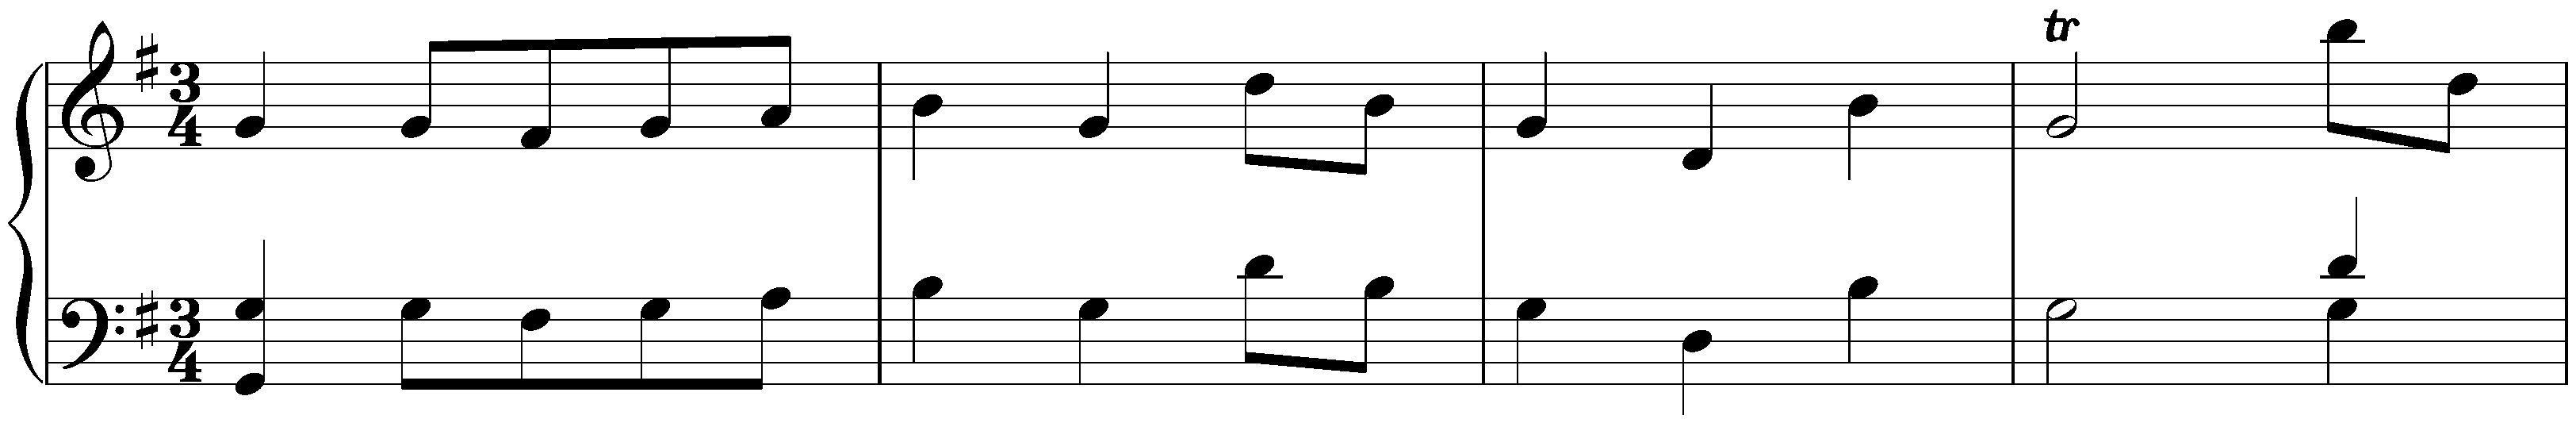 Sonata in G major, Hob. XVI:11; 3. Menuet – Trio